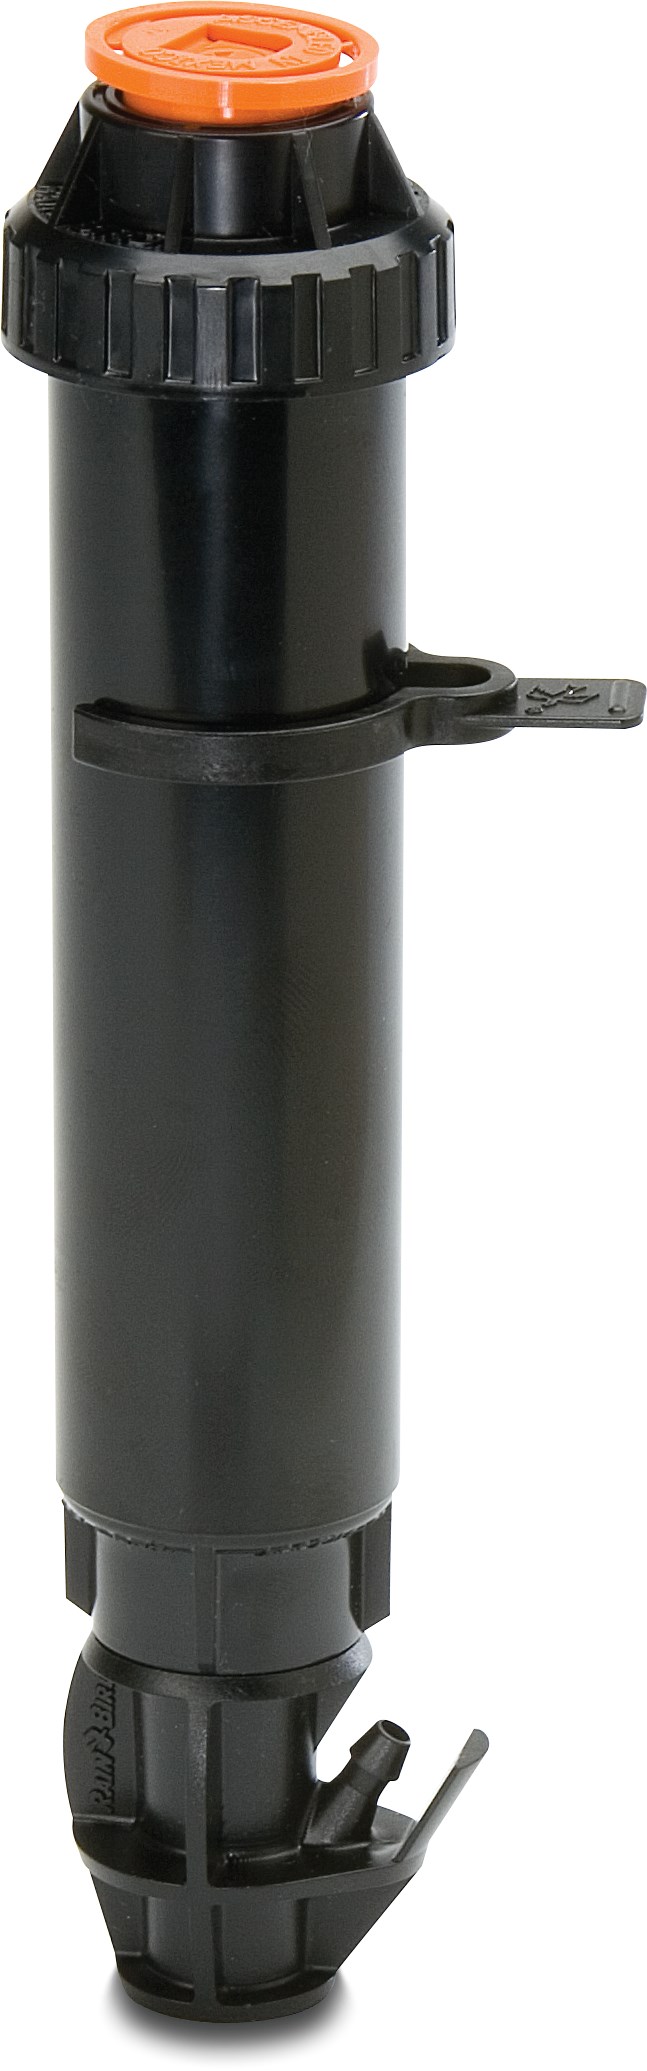 Rain Bird Sprinkler base plastic 6 mm barbed x UNC male thread type Xeri-Pop-400X